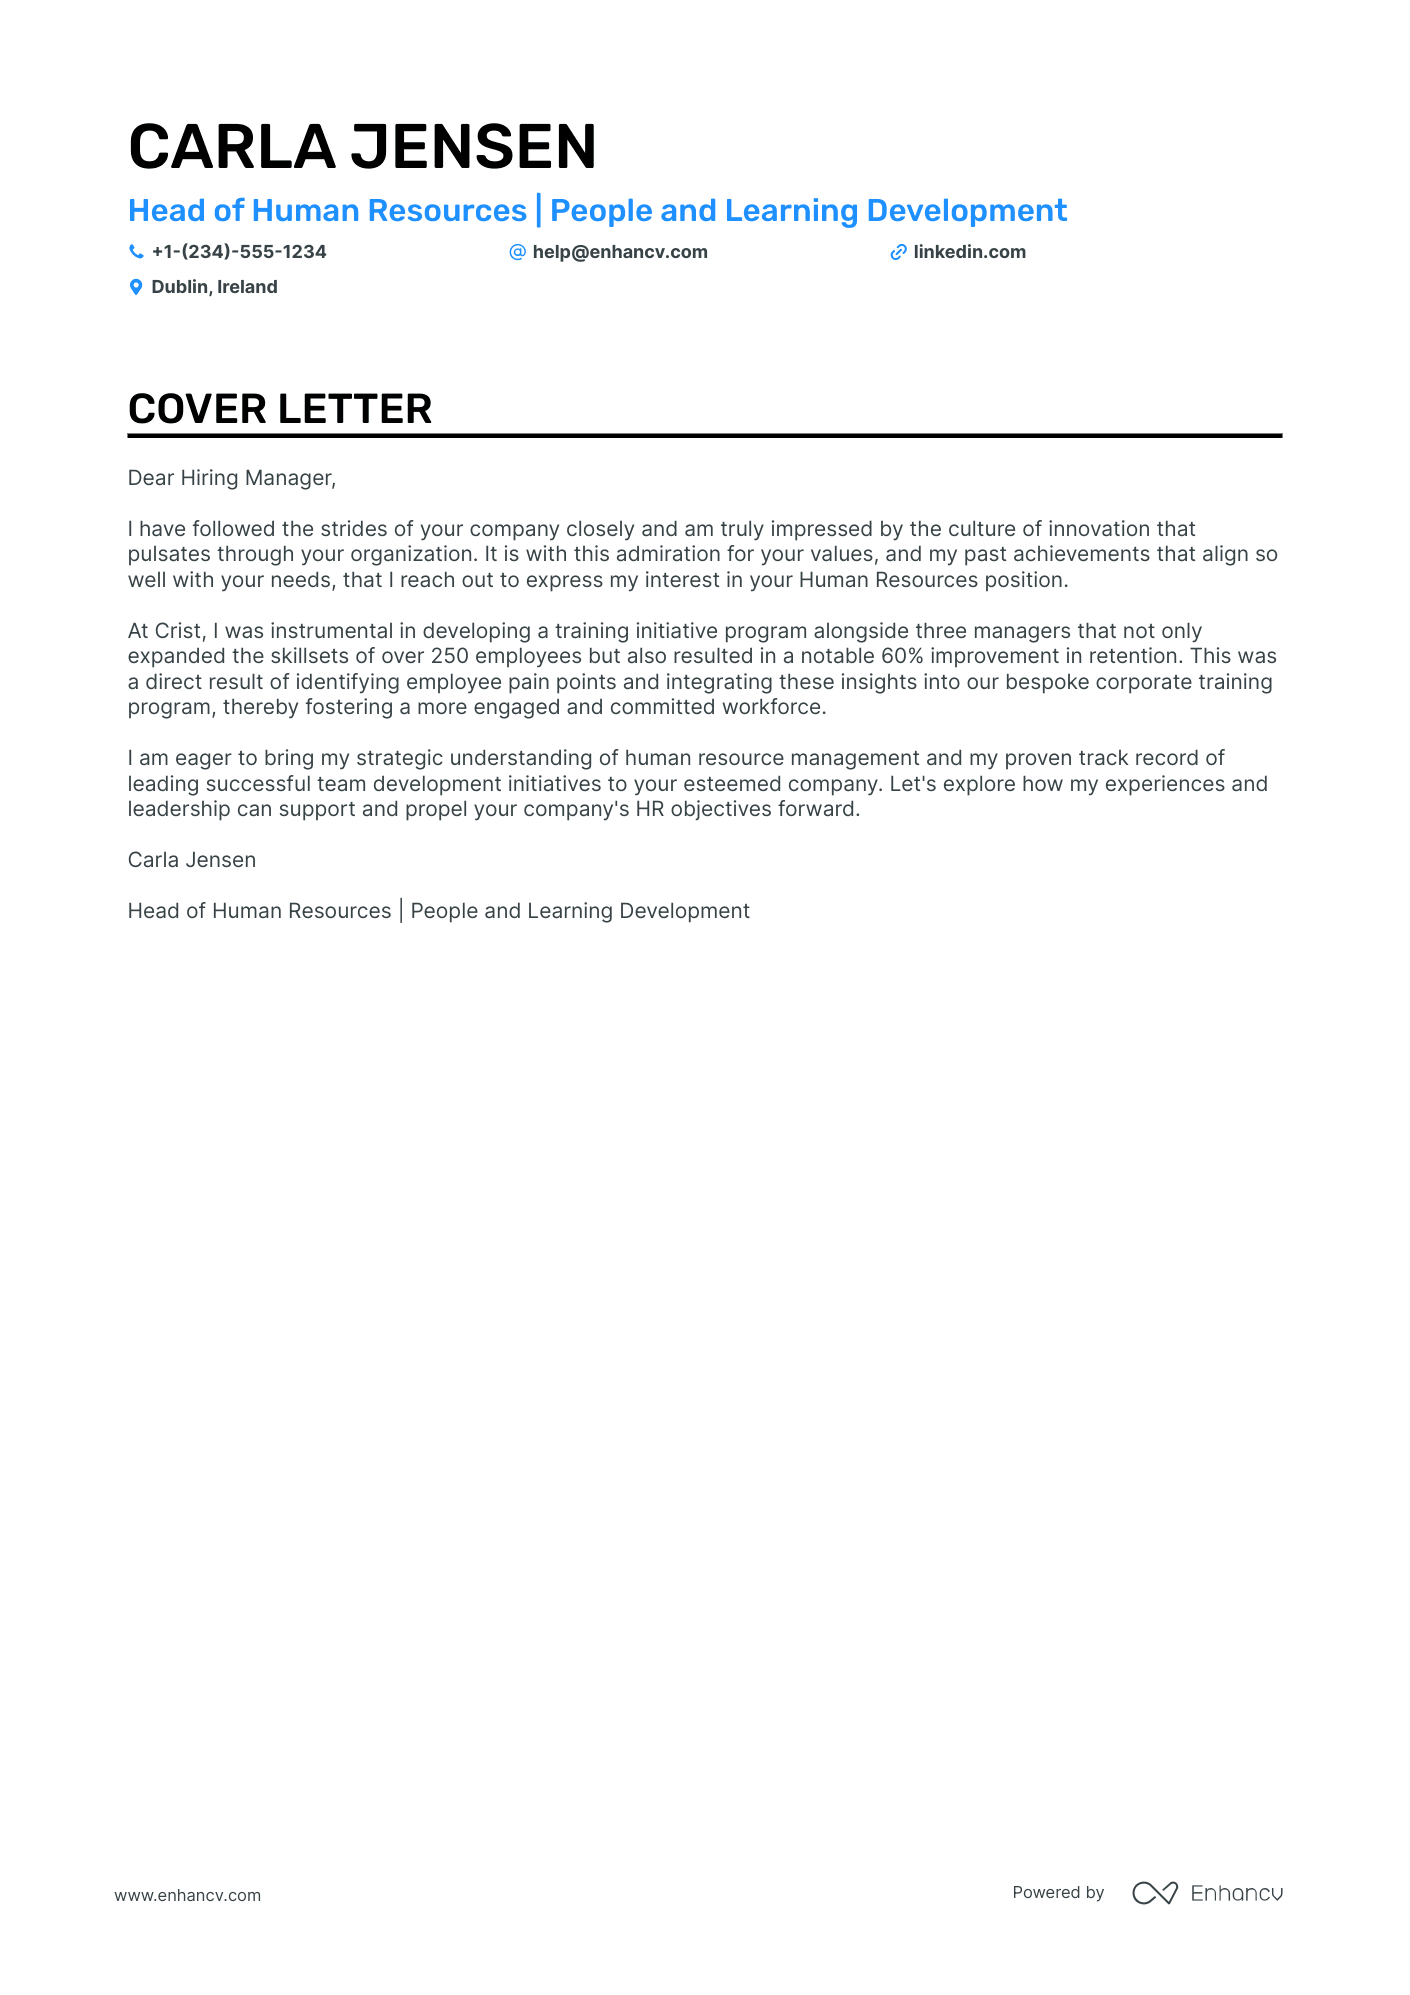 HR Manager cover letter